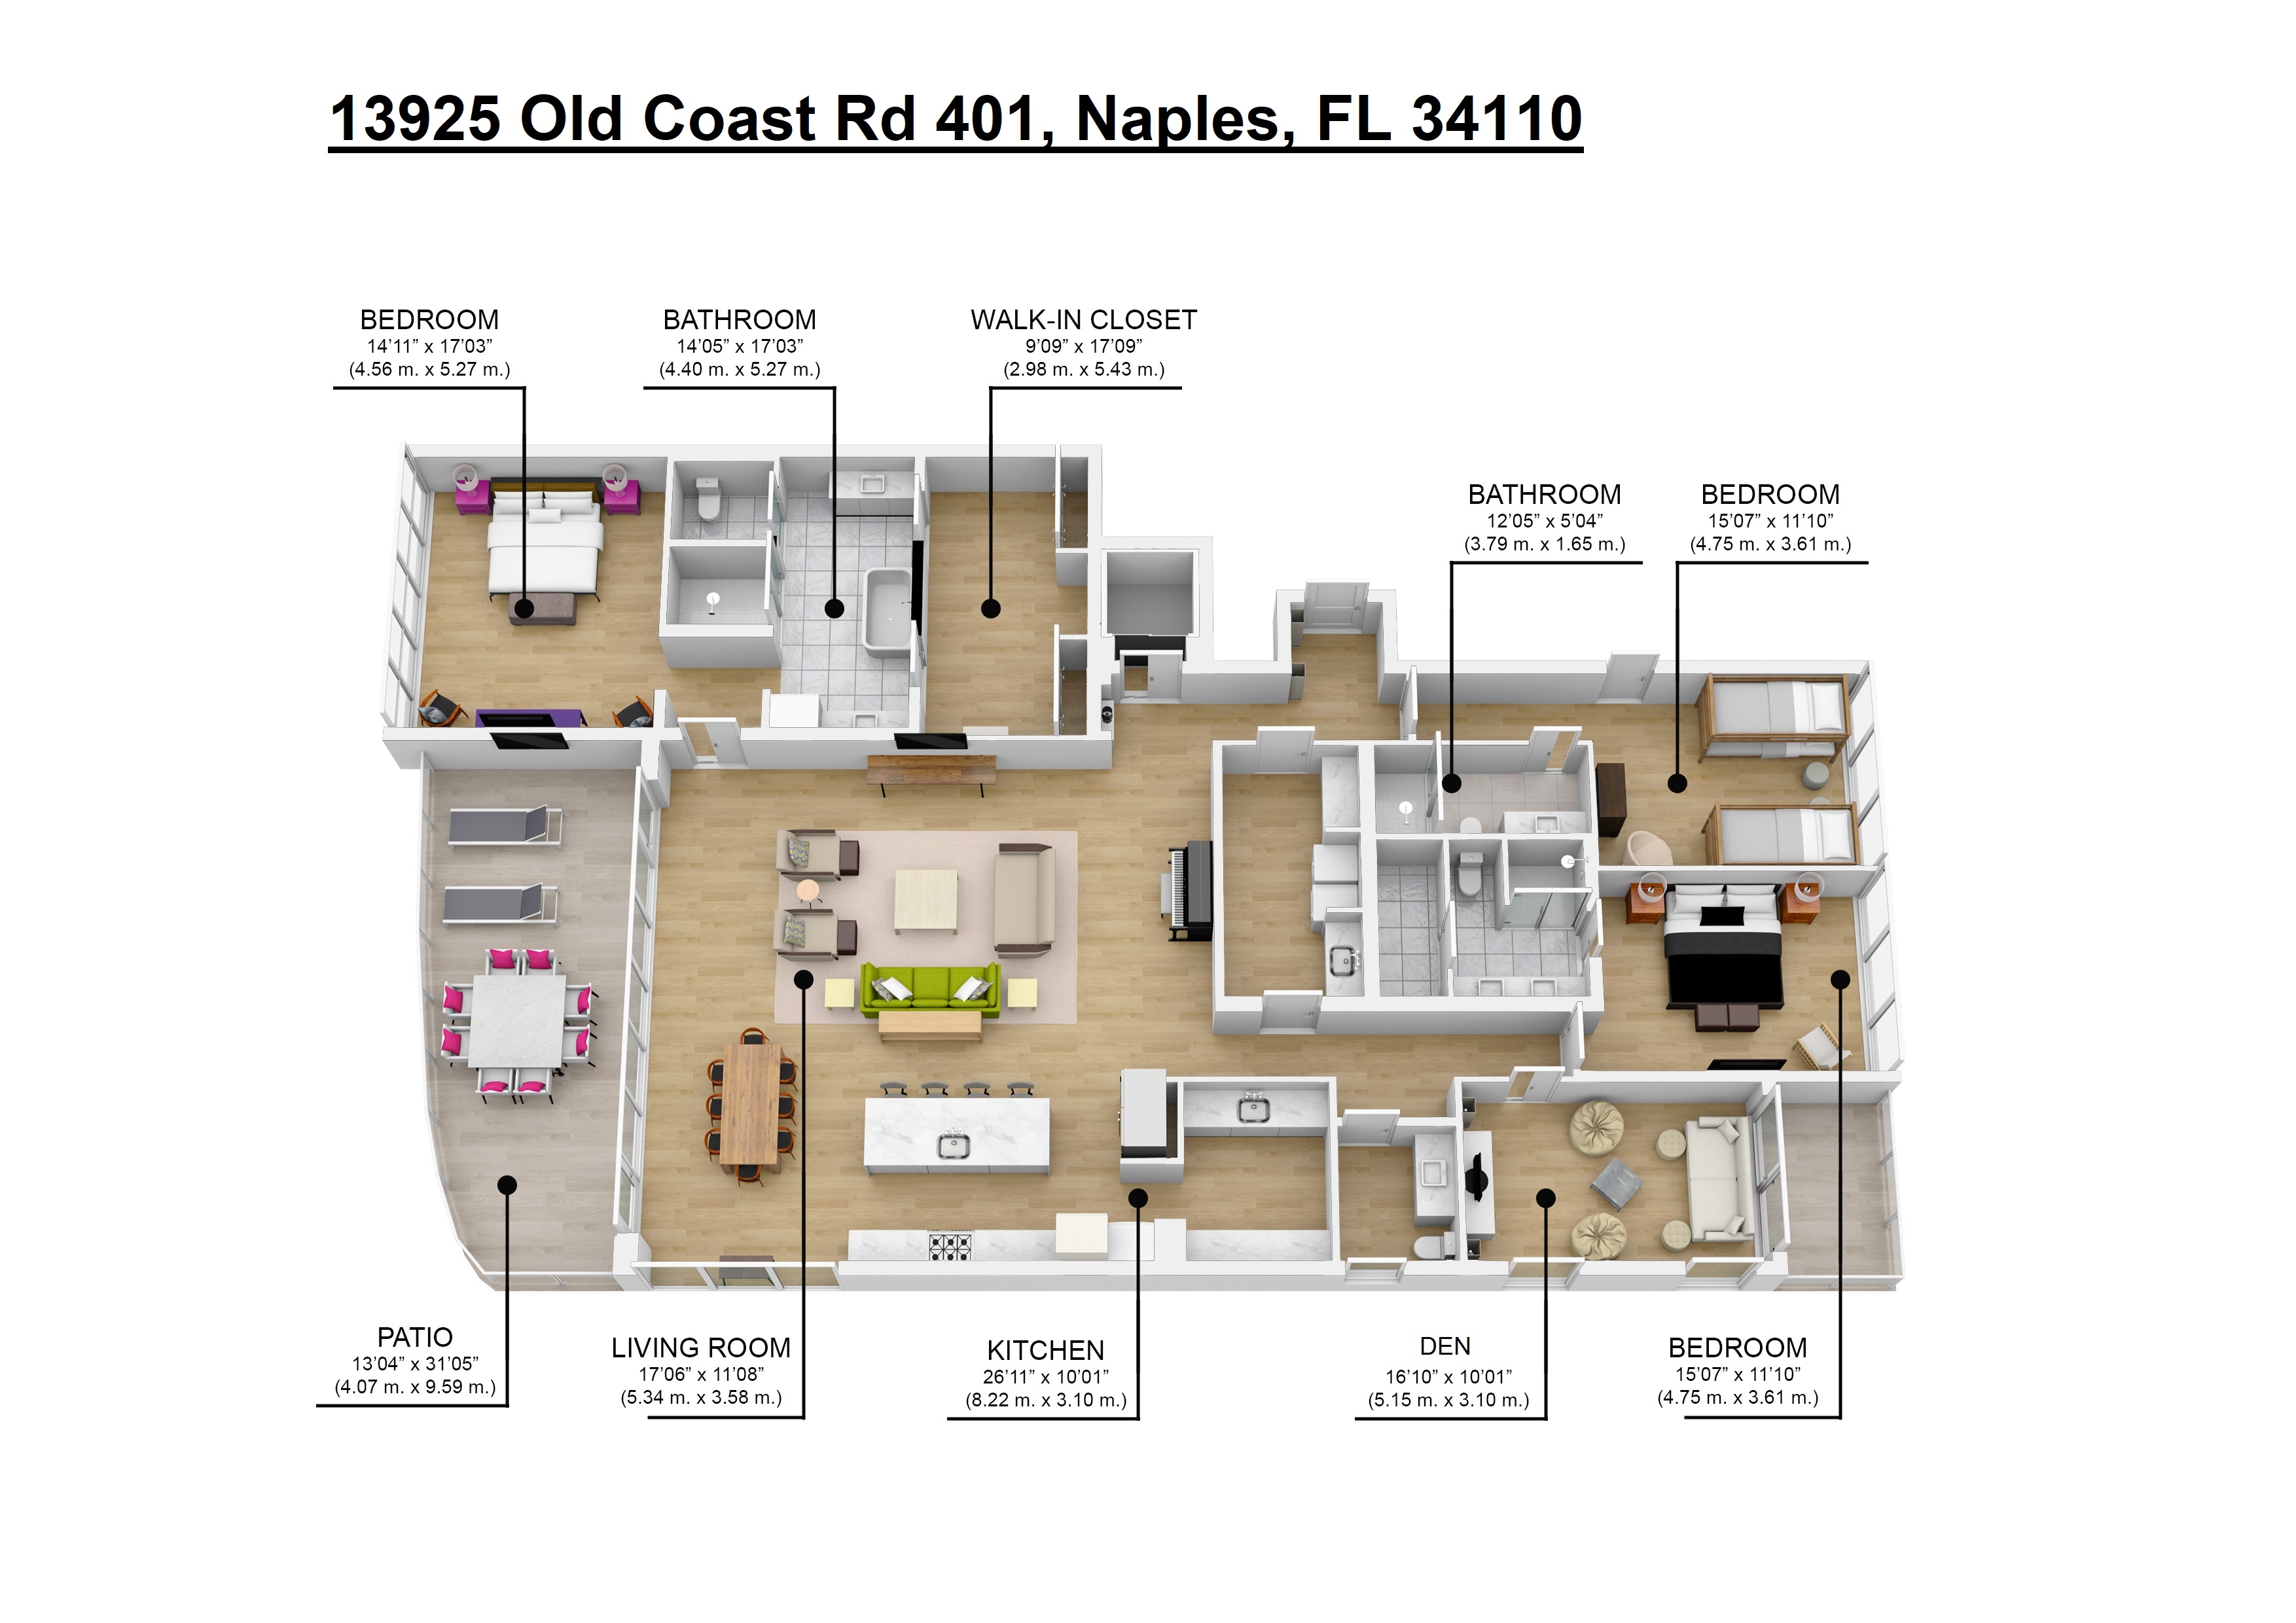 13925 Old Coast Rd 401, Naples, FL 34110 floor plan